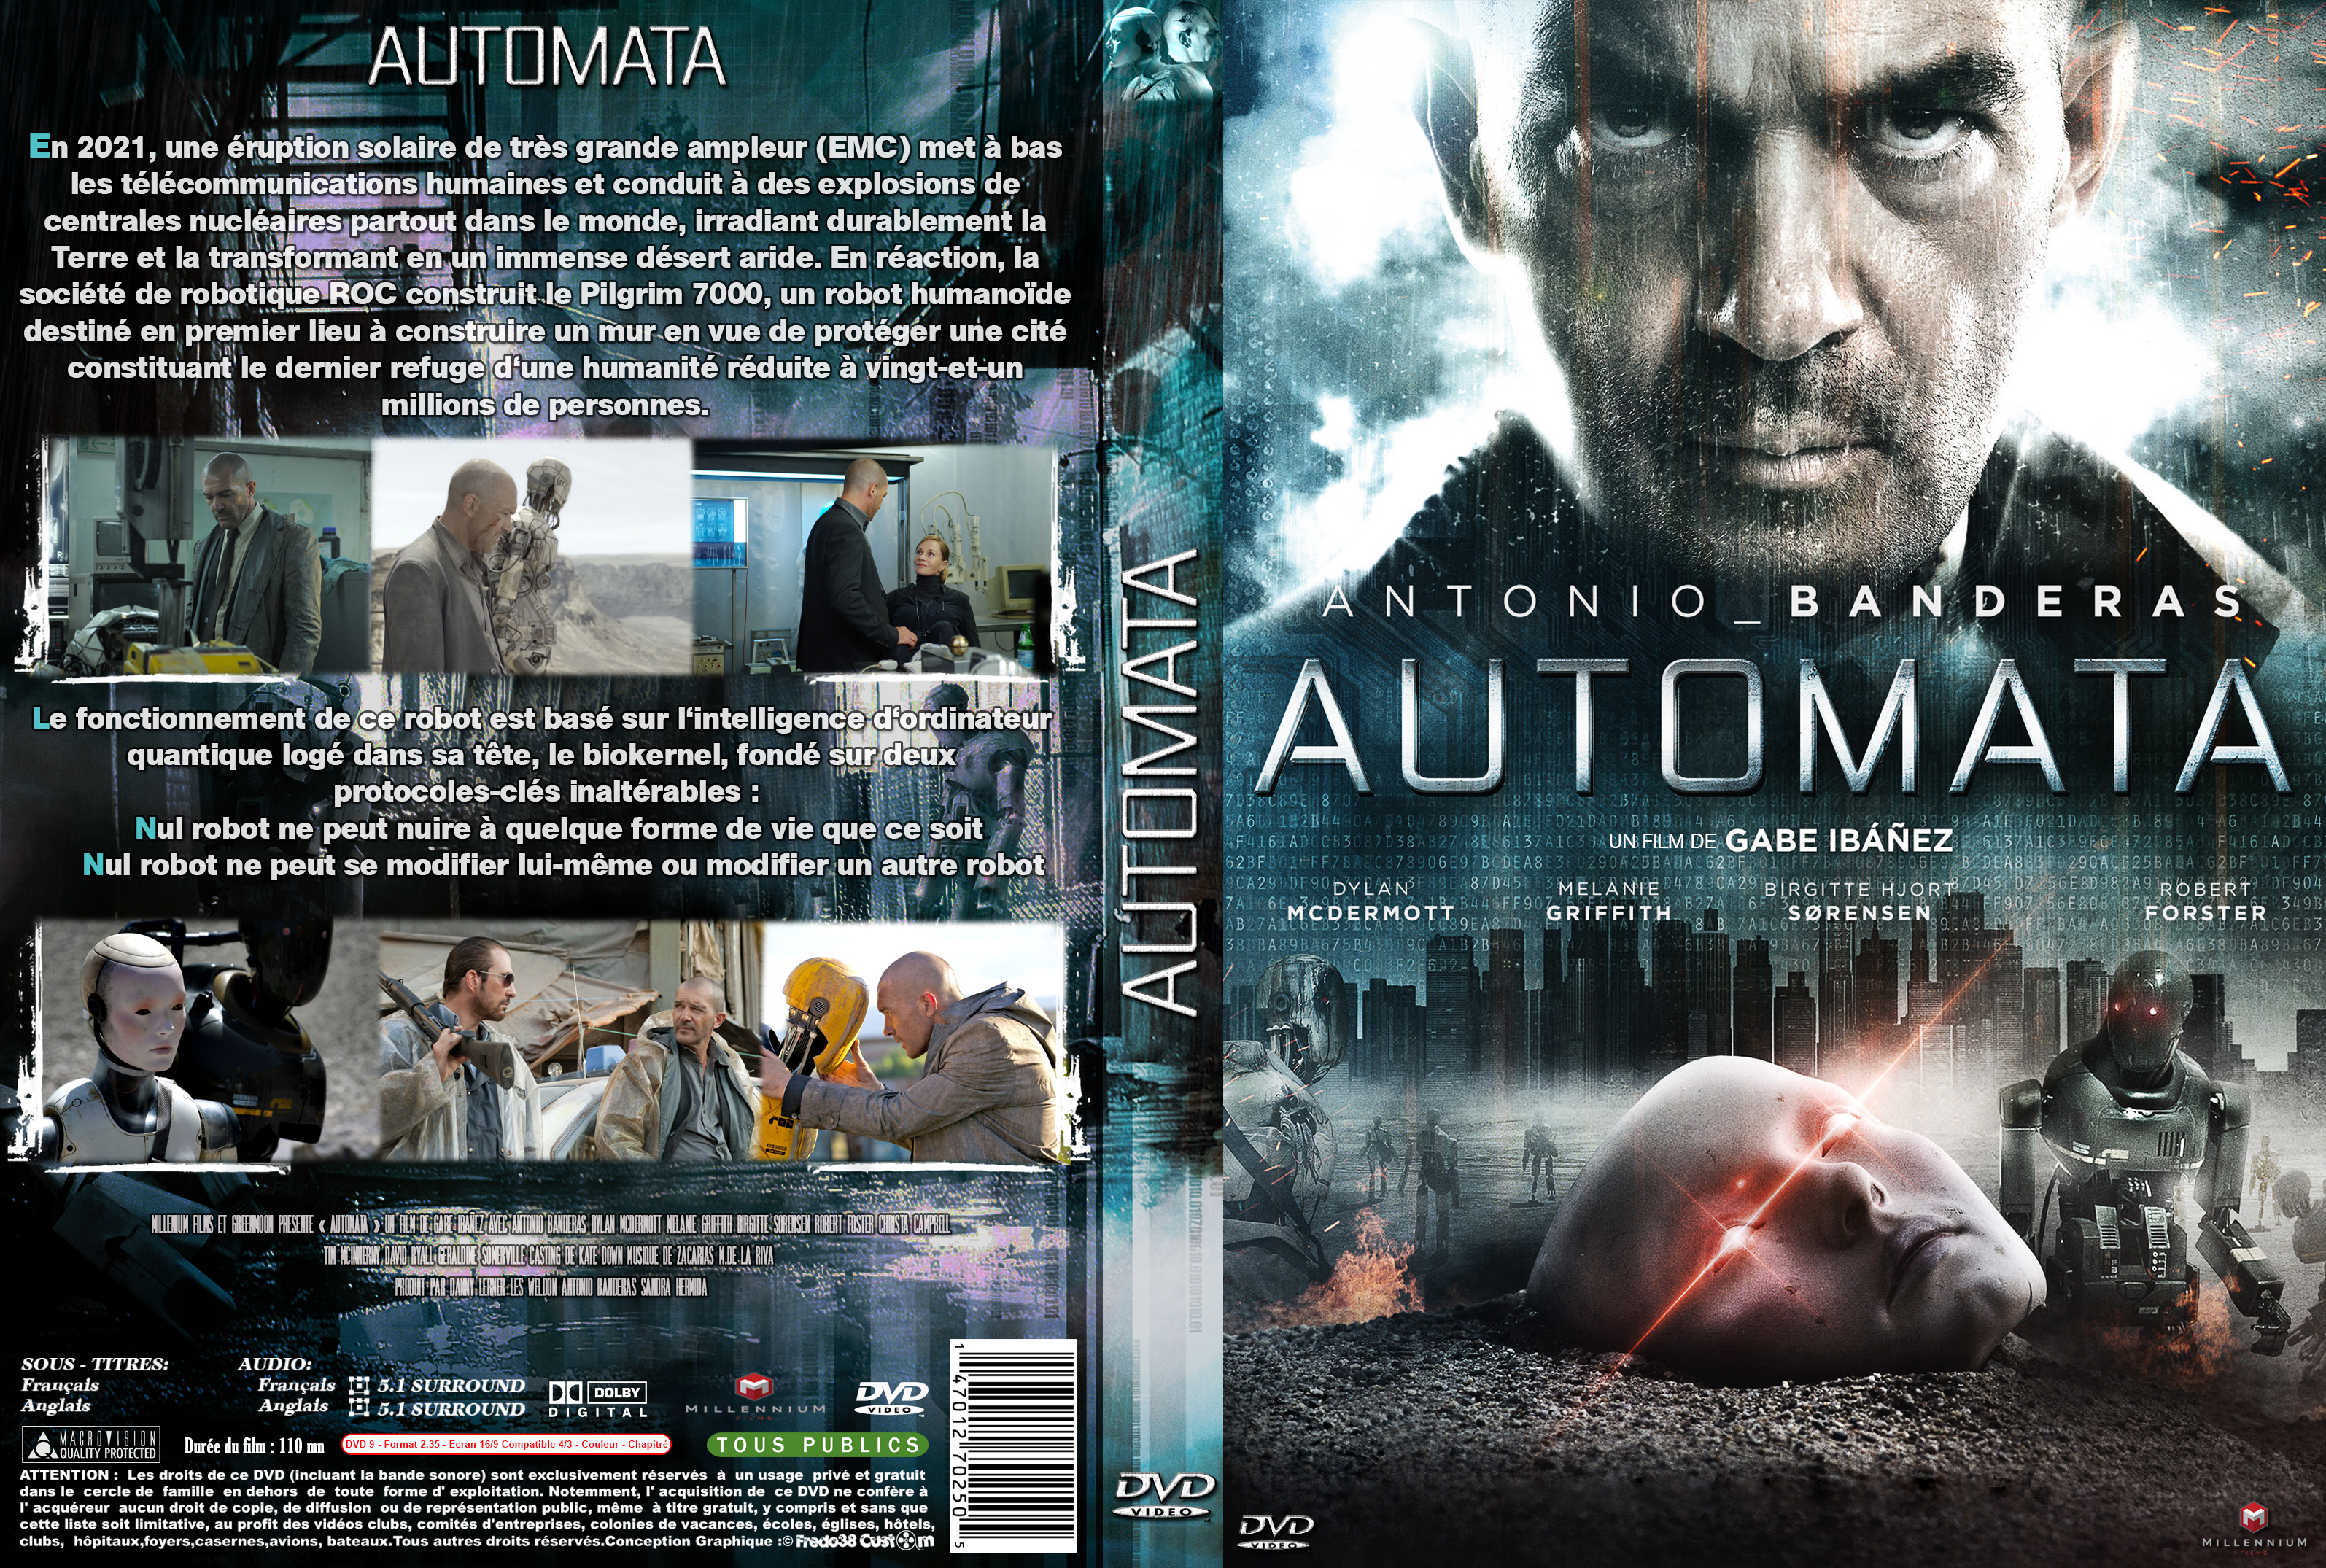 Jaquette DVD Automata custom